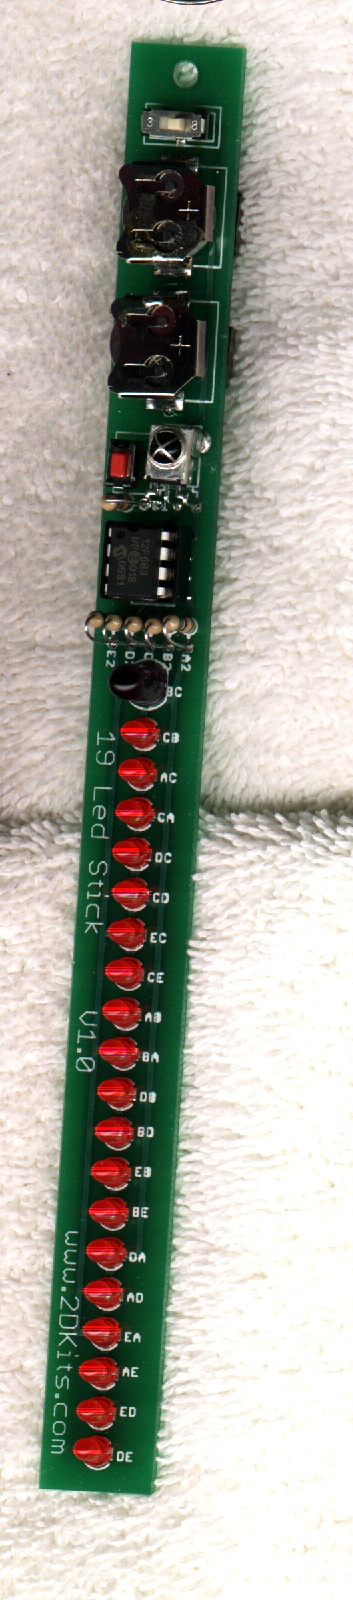 19 LED Stick Blinkie Kit - Click Image to Close